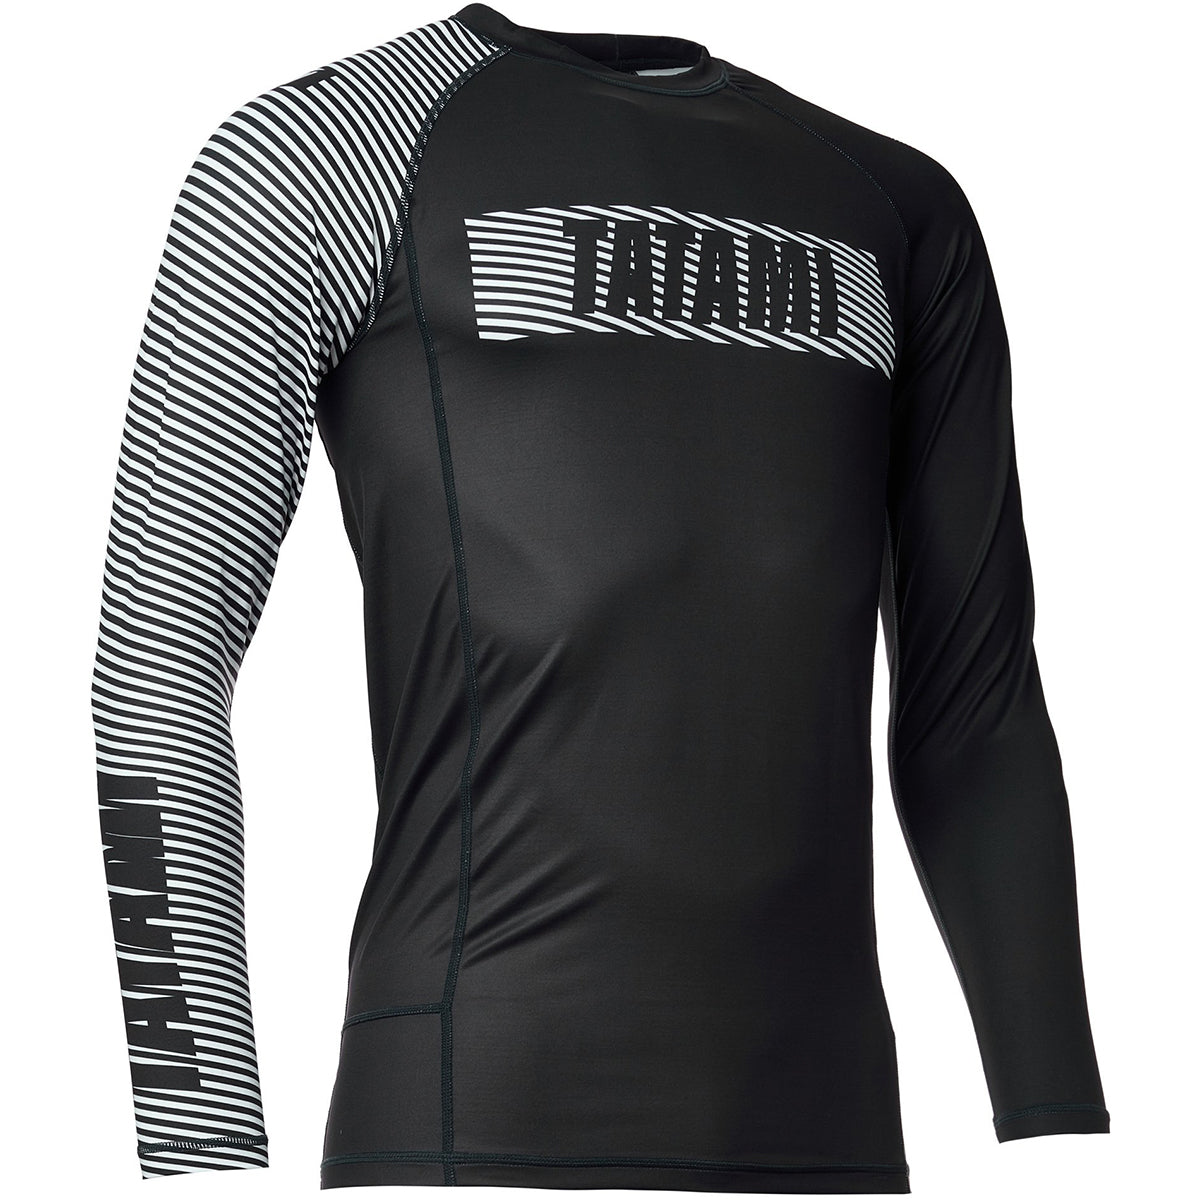 Tatami Fightwear Essential 3.0 Long Sleeve Rashguard - Black/White Tatami Fightwear